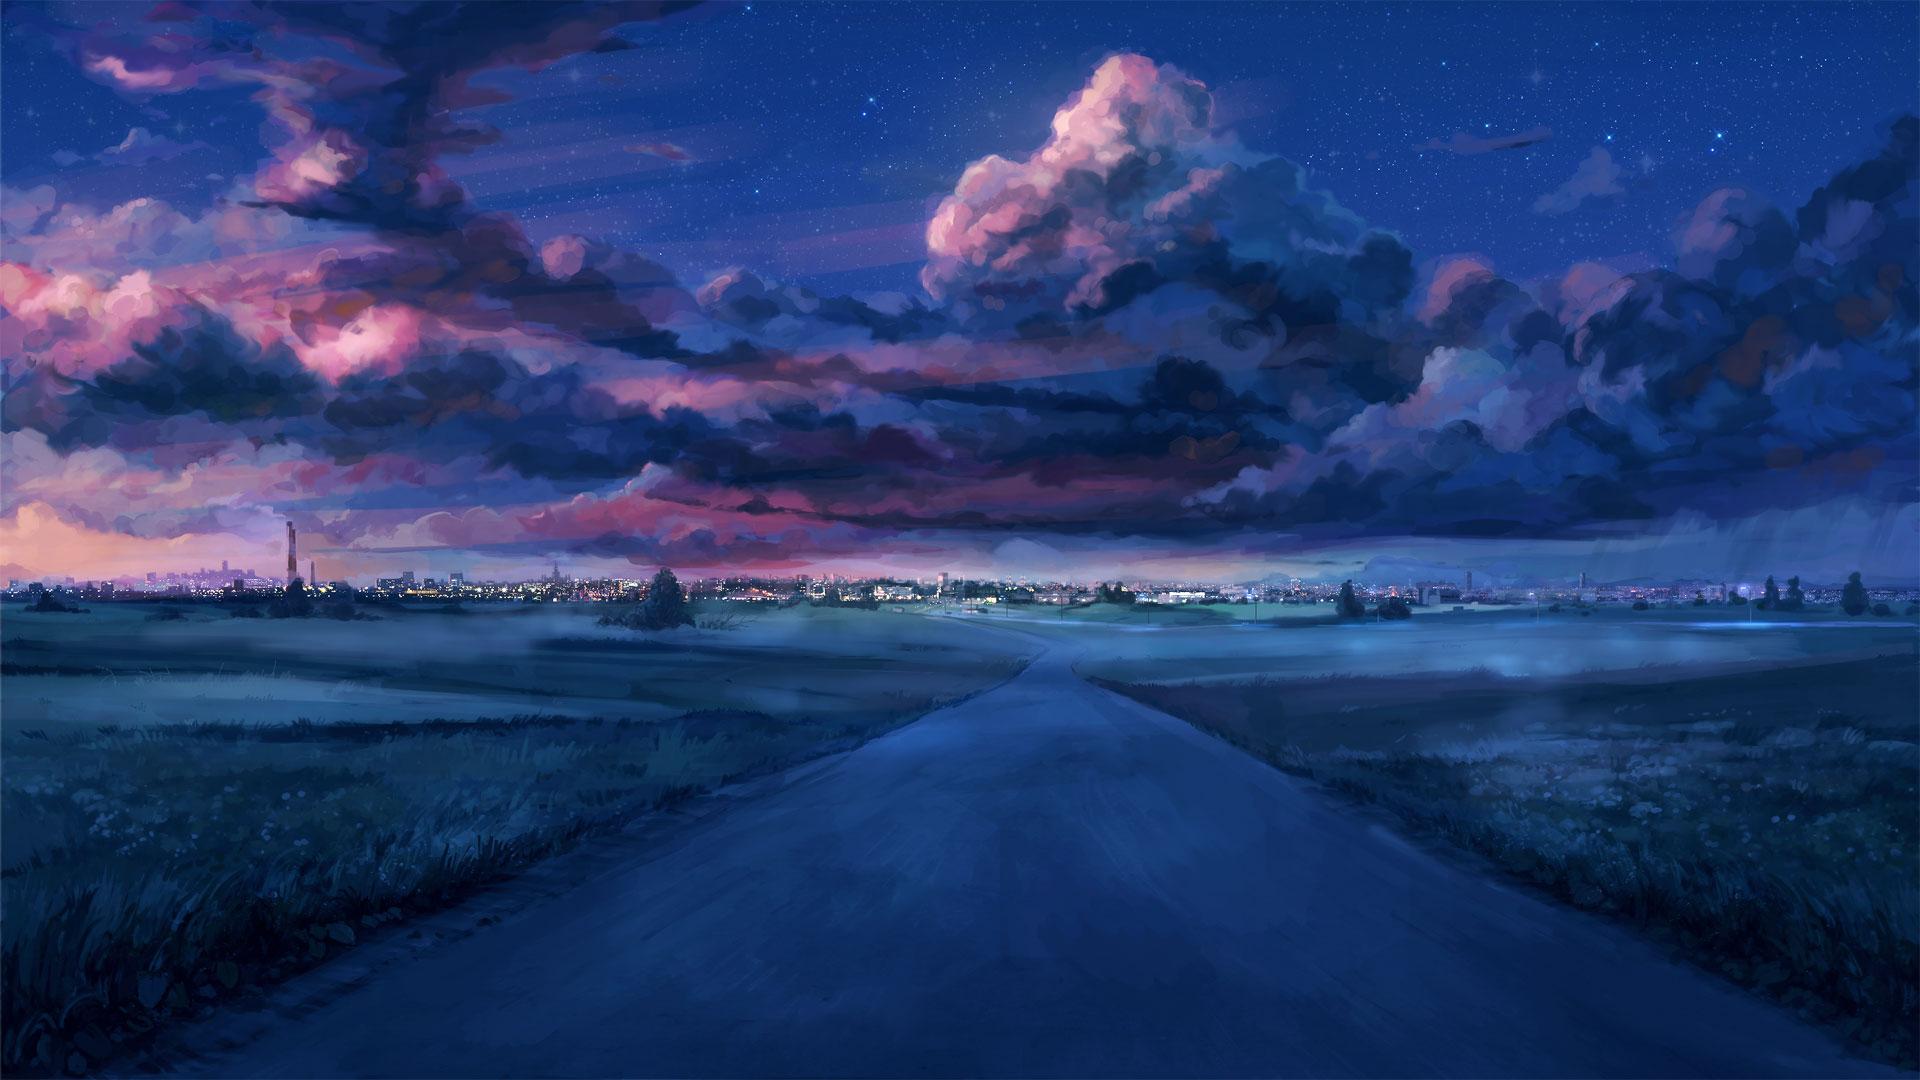 Anime Background Night